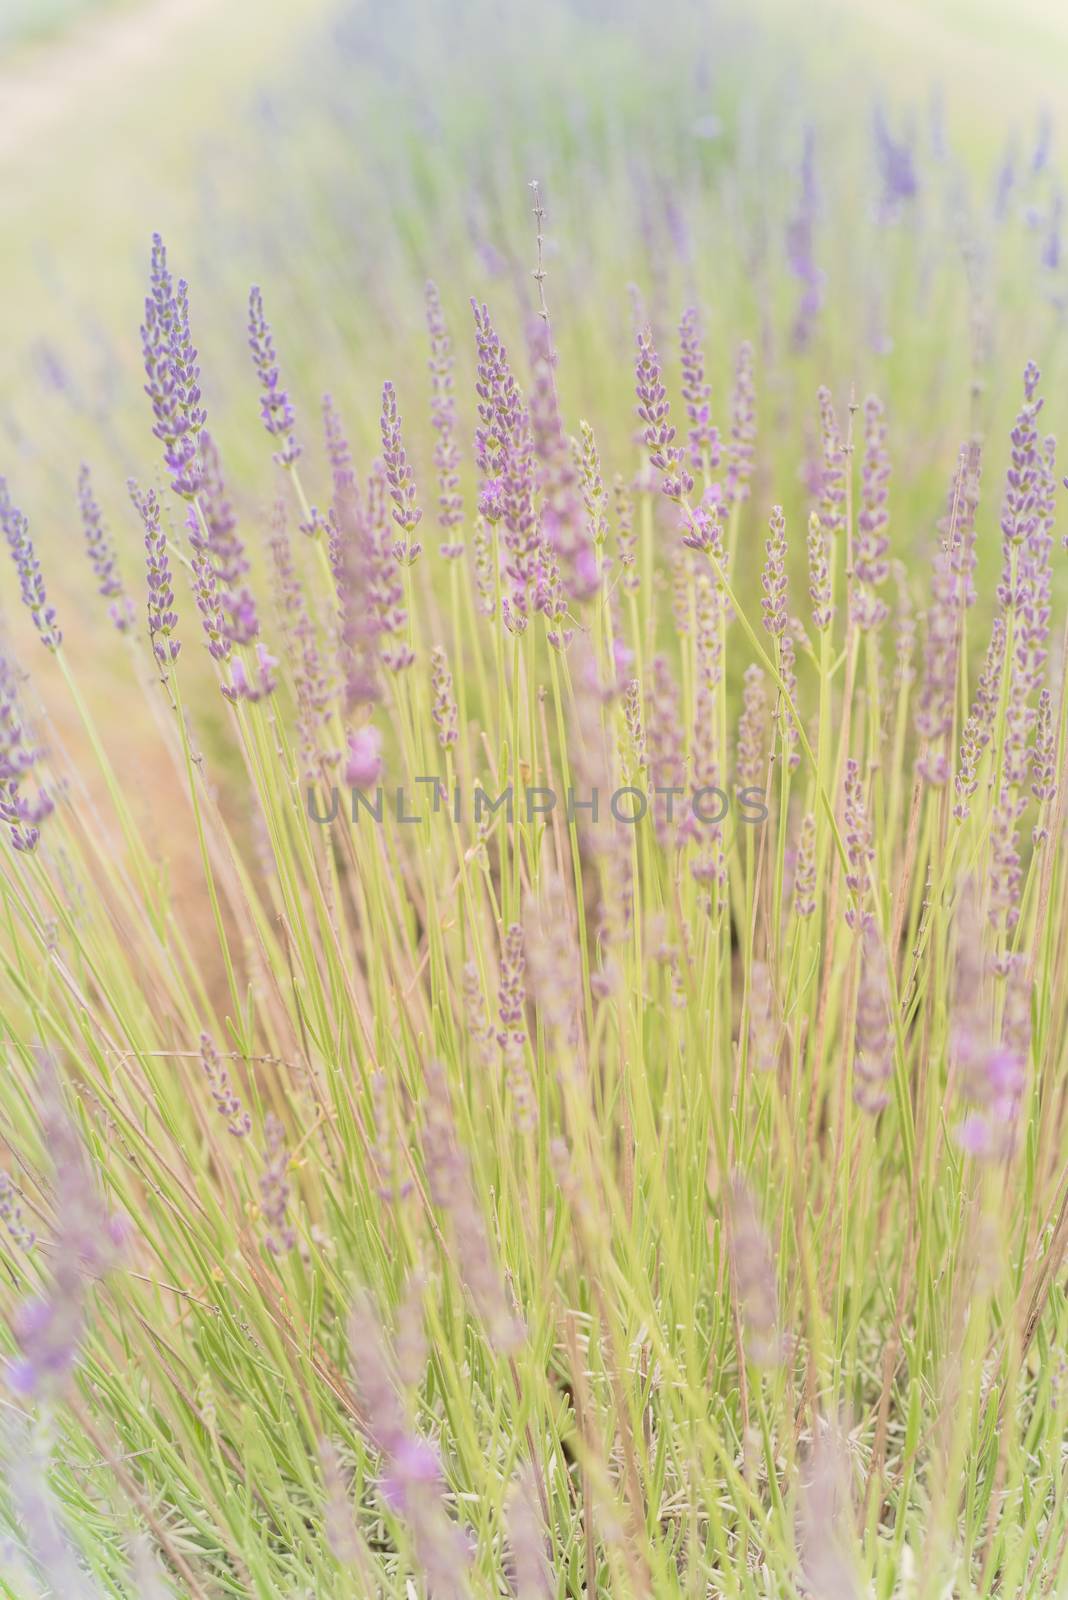 Warm light full blossom lavender bush at organic farm near Dallas, Texas, USA by trongnguyen